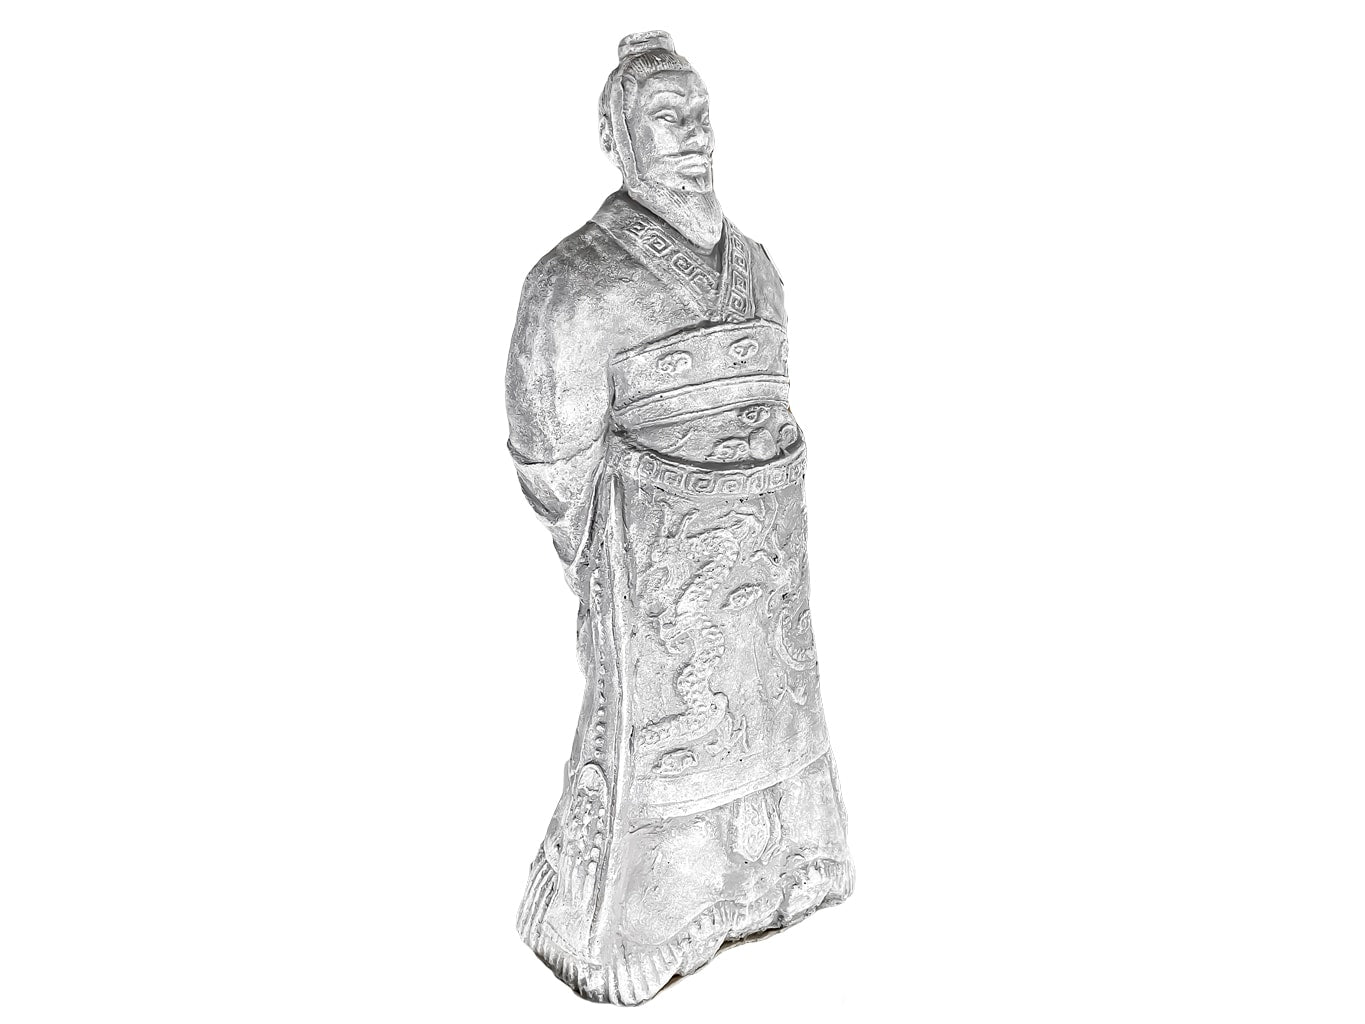 Oriental Emperor Stone Statue